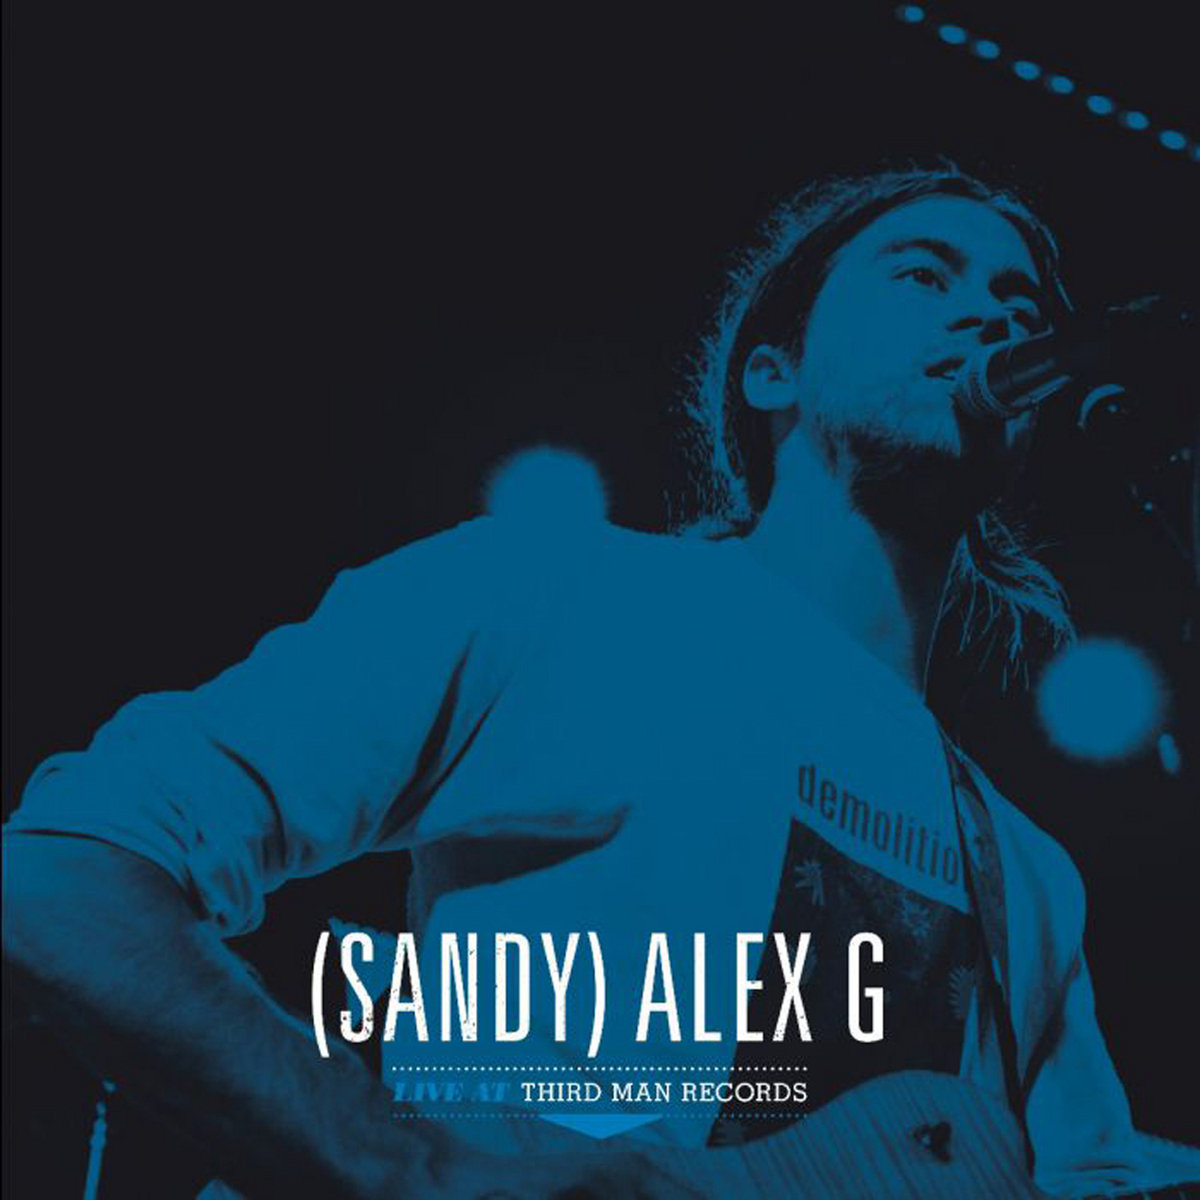 Stream ㅤㅤㅤ  Listen to (Sandy) Alex G - High playlist online for free on  SoundCloud